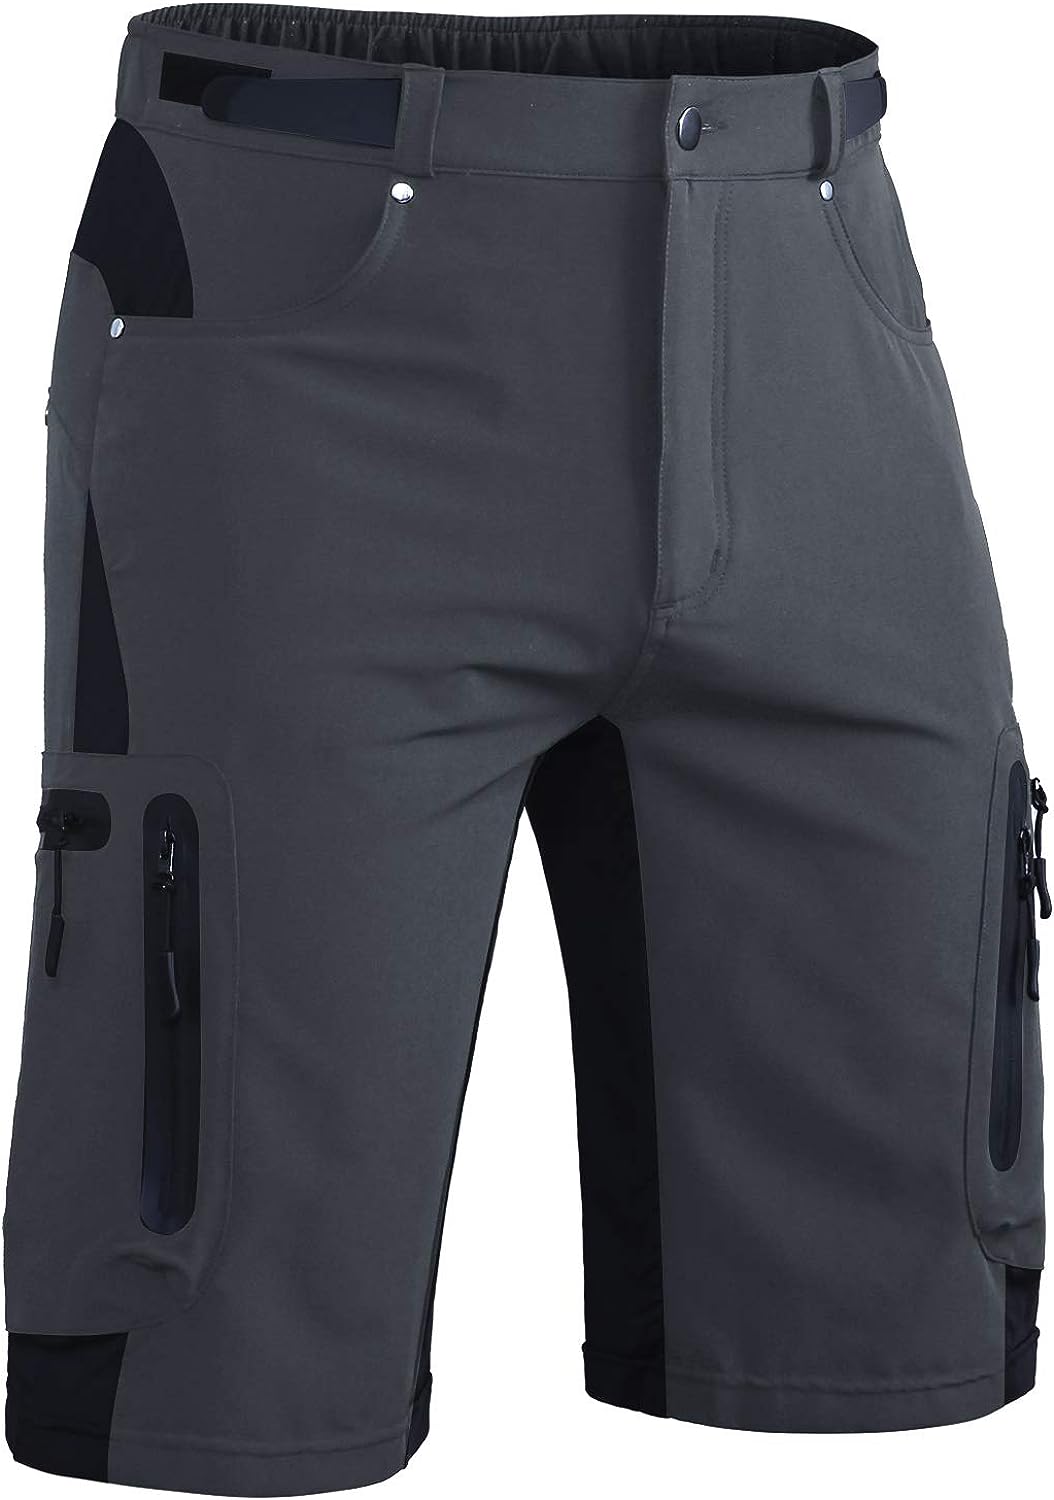 Men's Hiking Cargo Shorts - Lightweight, Quick-Dry, Stretch MTB